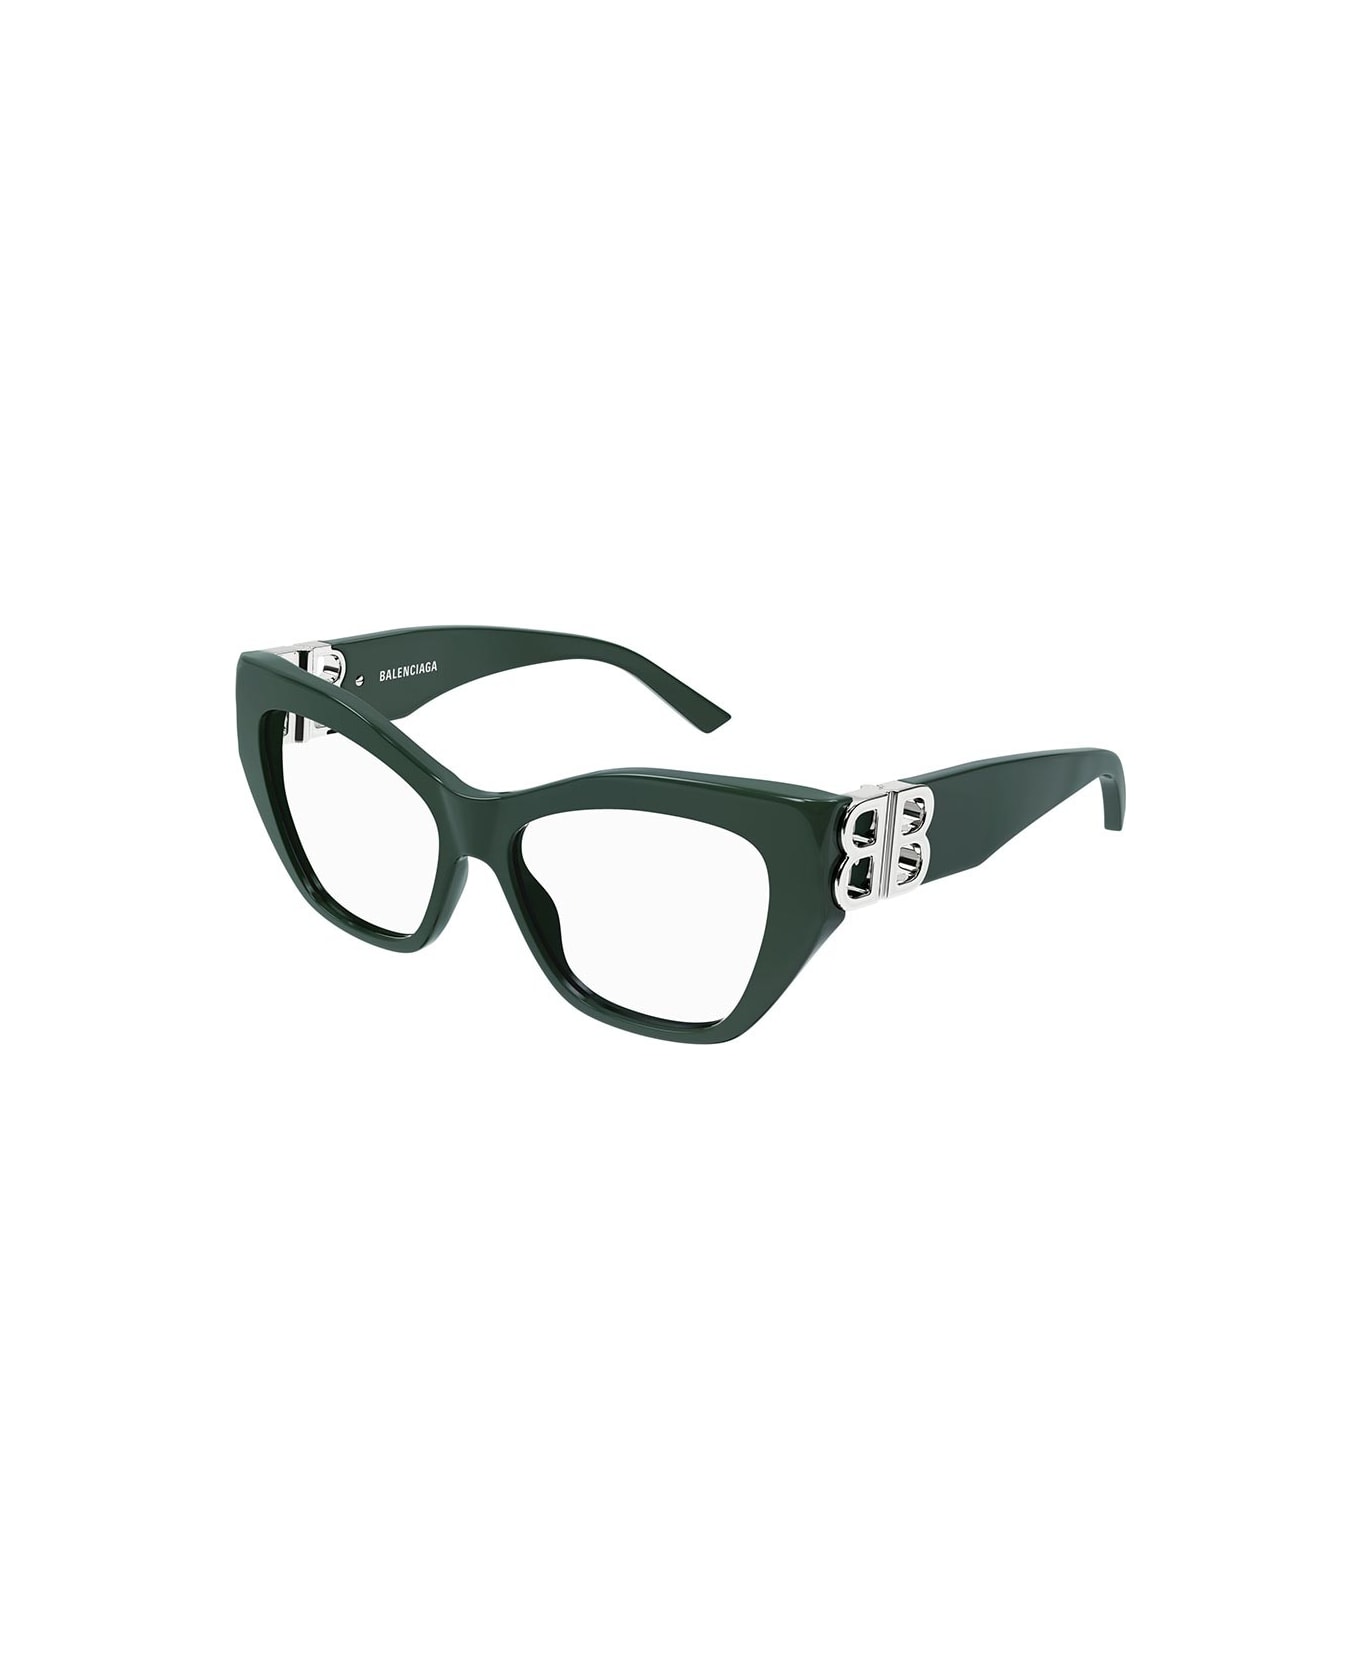 Balenciaga Eyewear Glasses - Verde